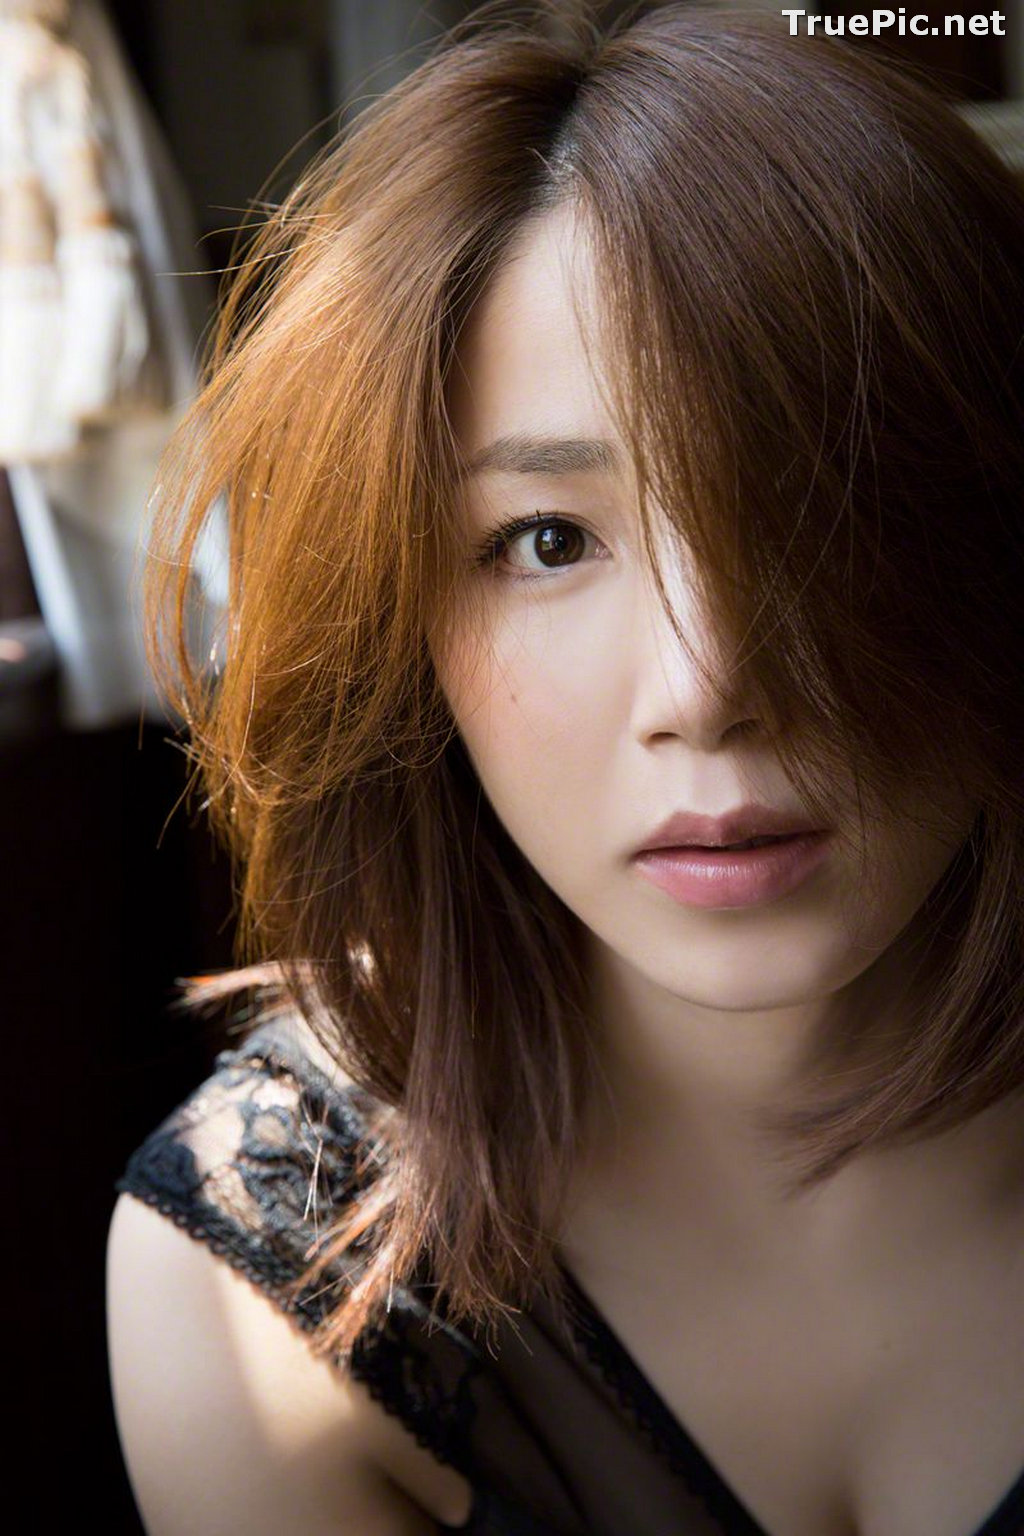 Image [Wanibooks Jacket] No.129 - Japanese Singer and Actress - You Kikkawa - TruePic.net - Picture-29